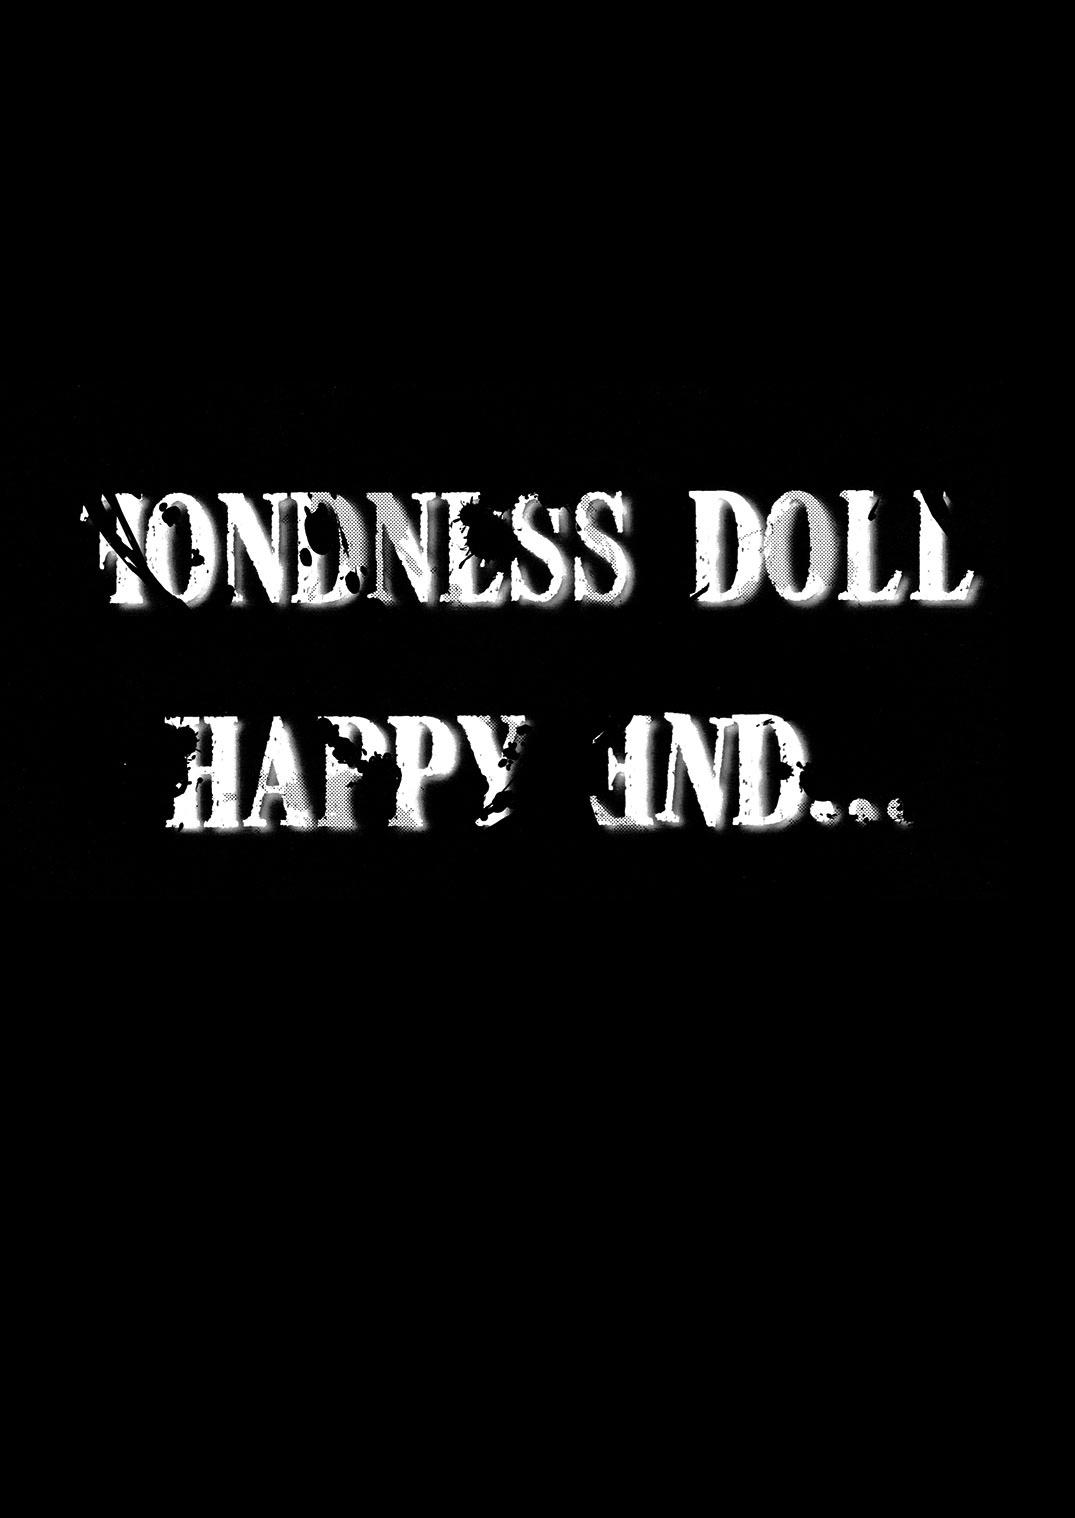 Fondness Doll Happy END 47